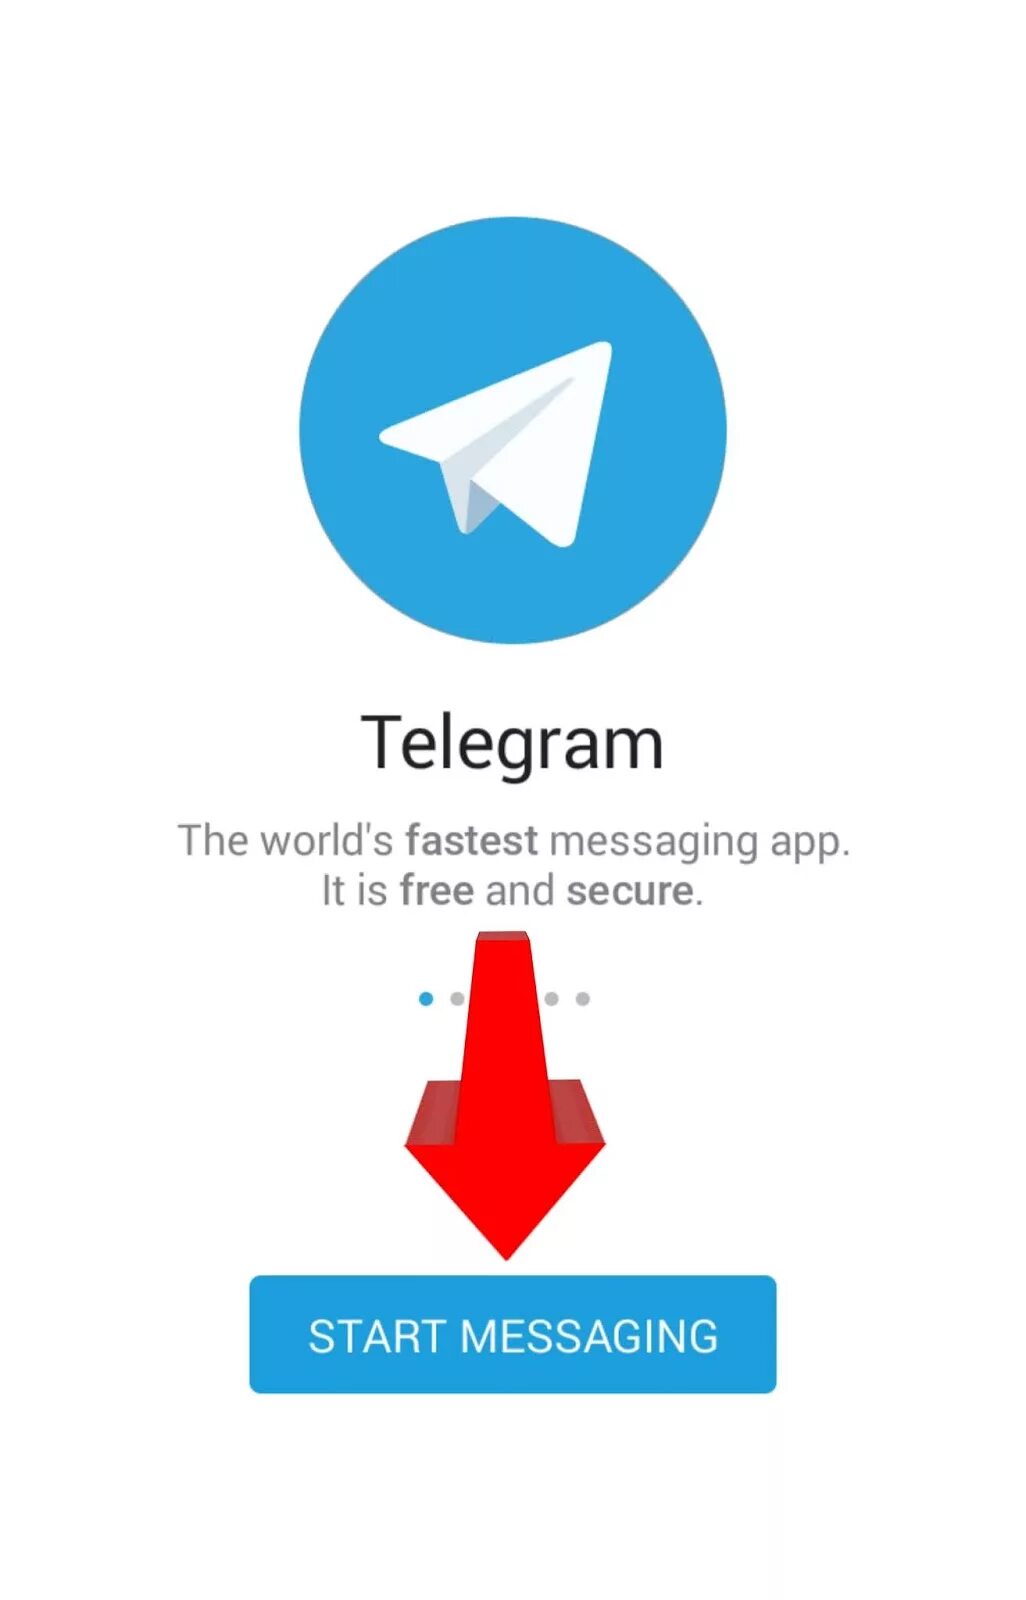 Телеграм трешбокс. Телеграм. Значок телеграм. Логотип телеграмма PNG. Медиа в телеграм.